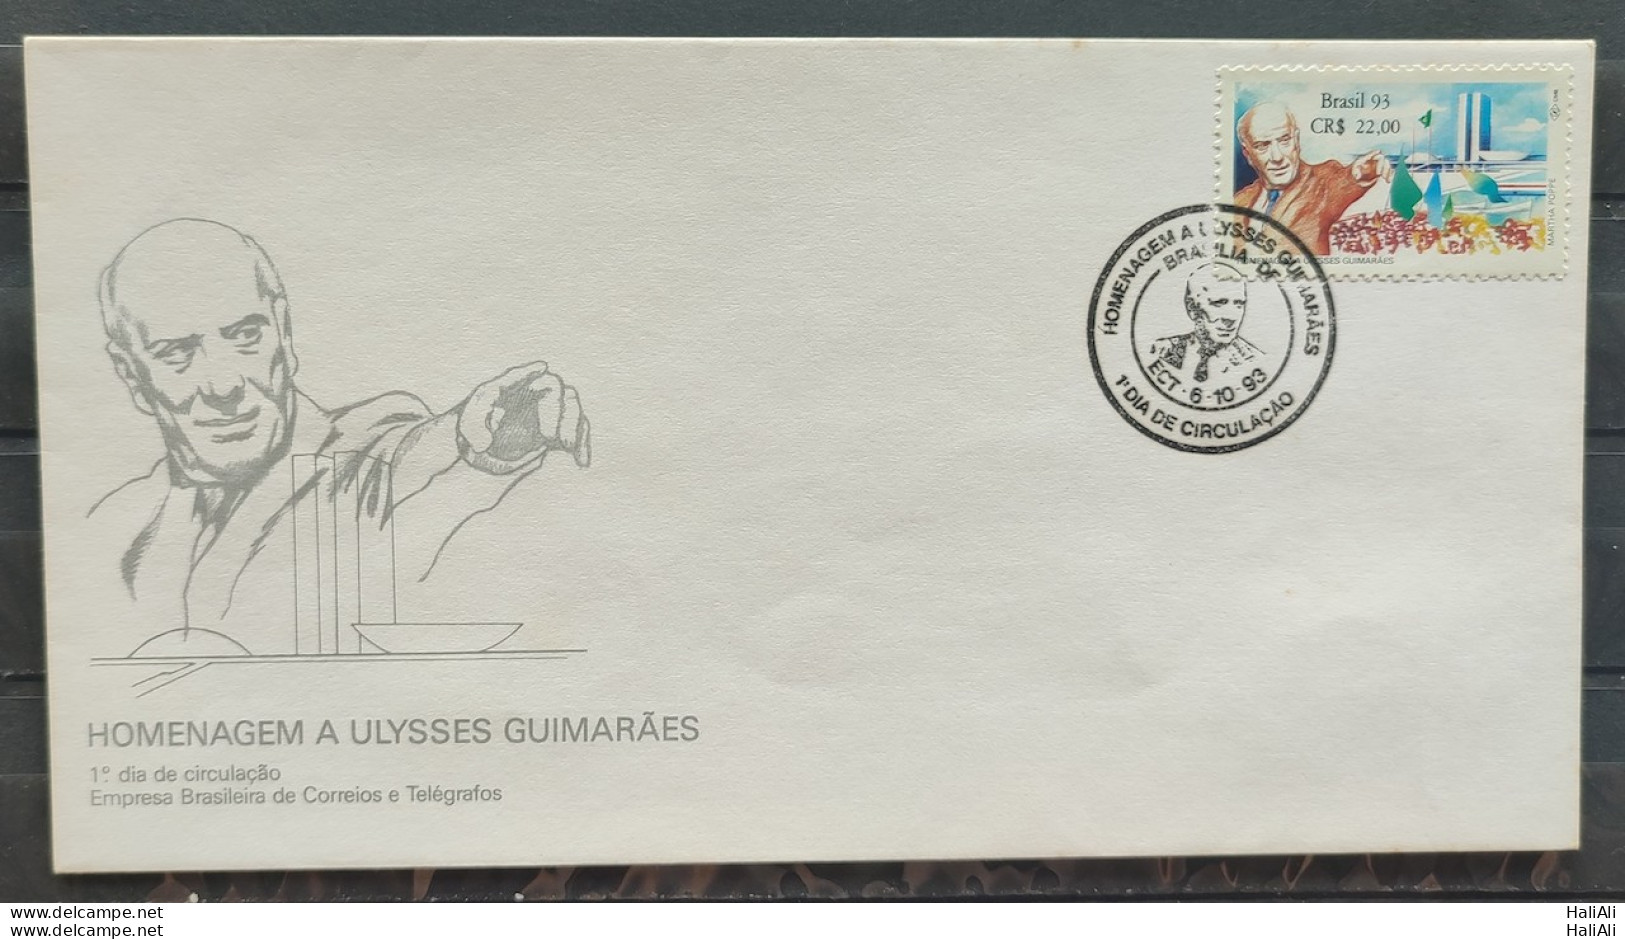 Brazil Envelope FDC 596 1993 Ulysses Guimaraes Brasilia National Congress CBC DF - FDC